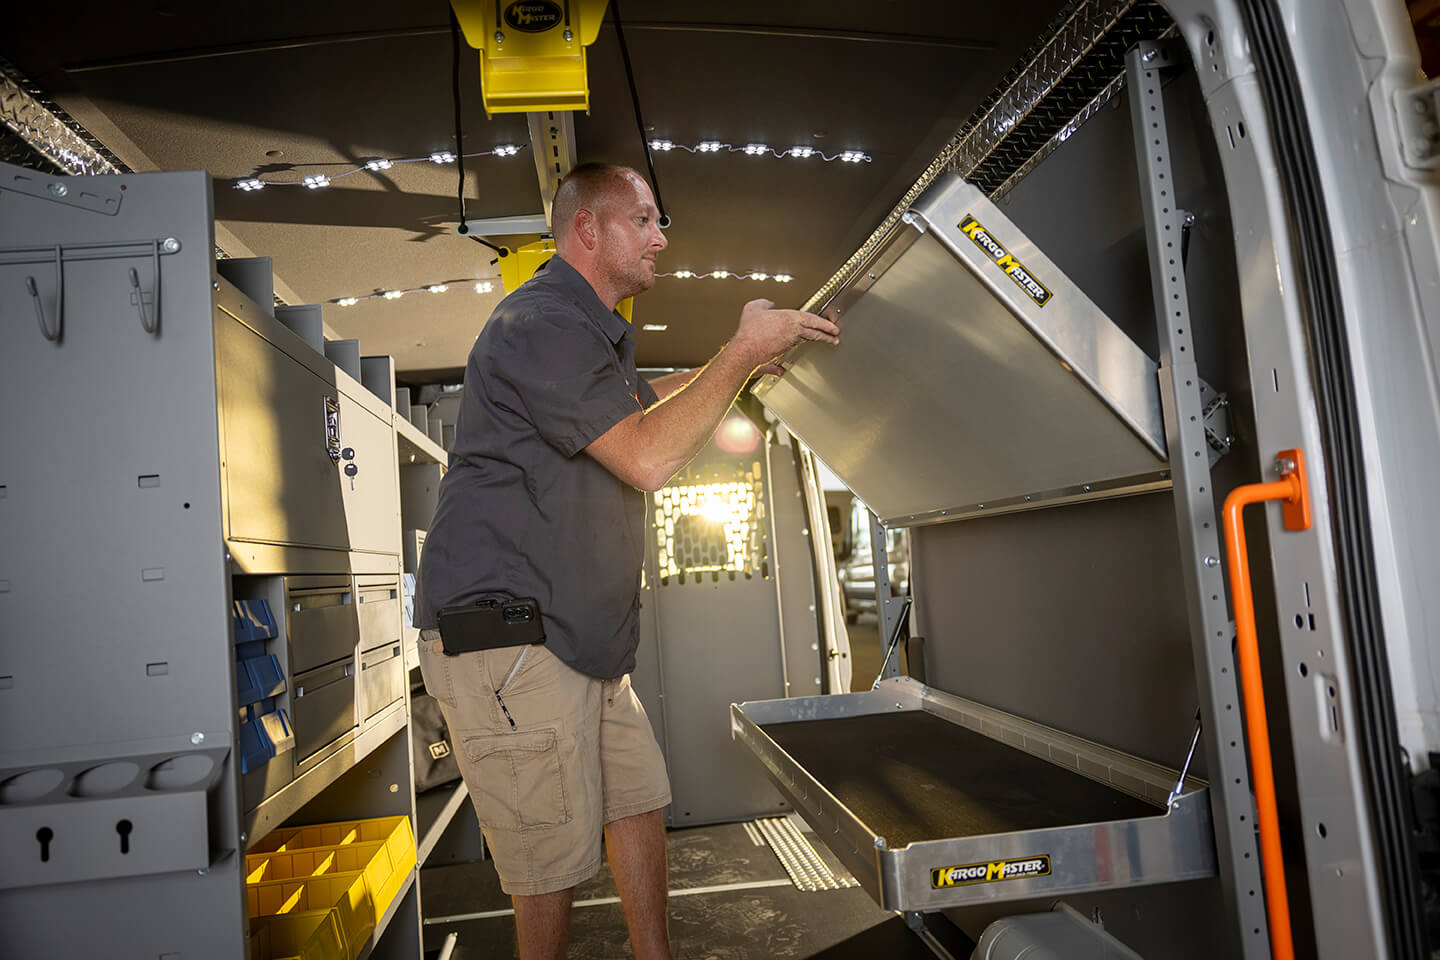 A man is installing shelving in a cargo van.